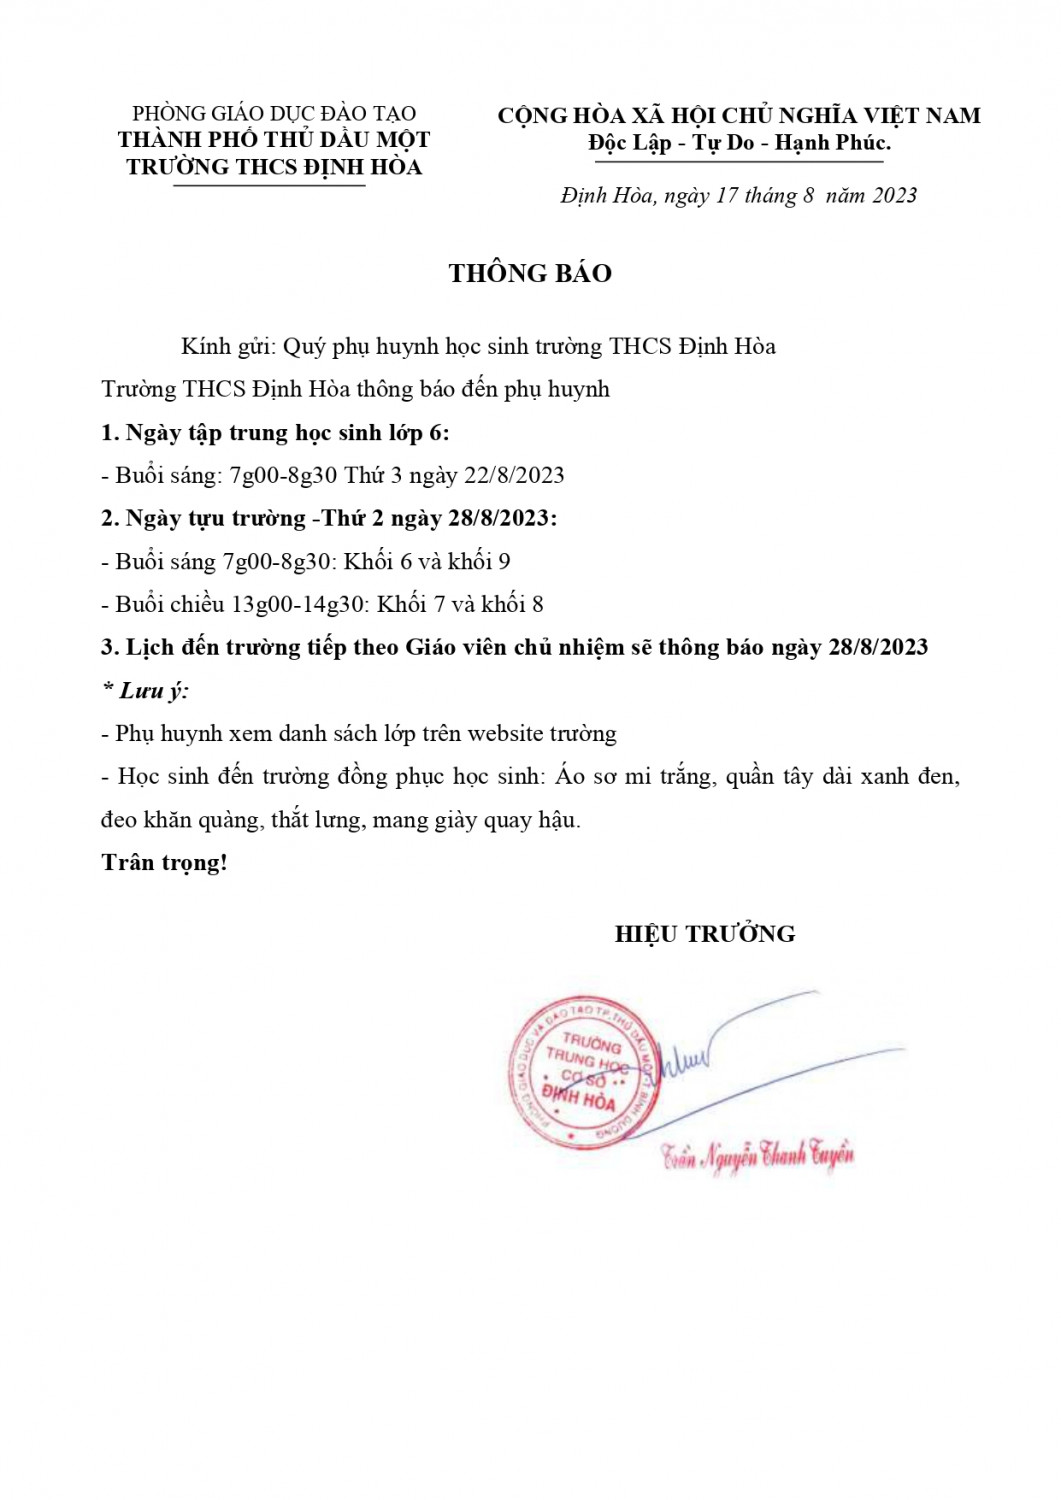 Thong bao tap trung THCS Dinh Hoa page 0001